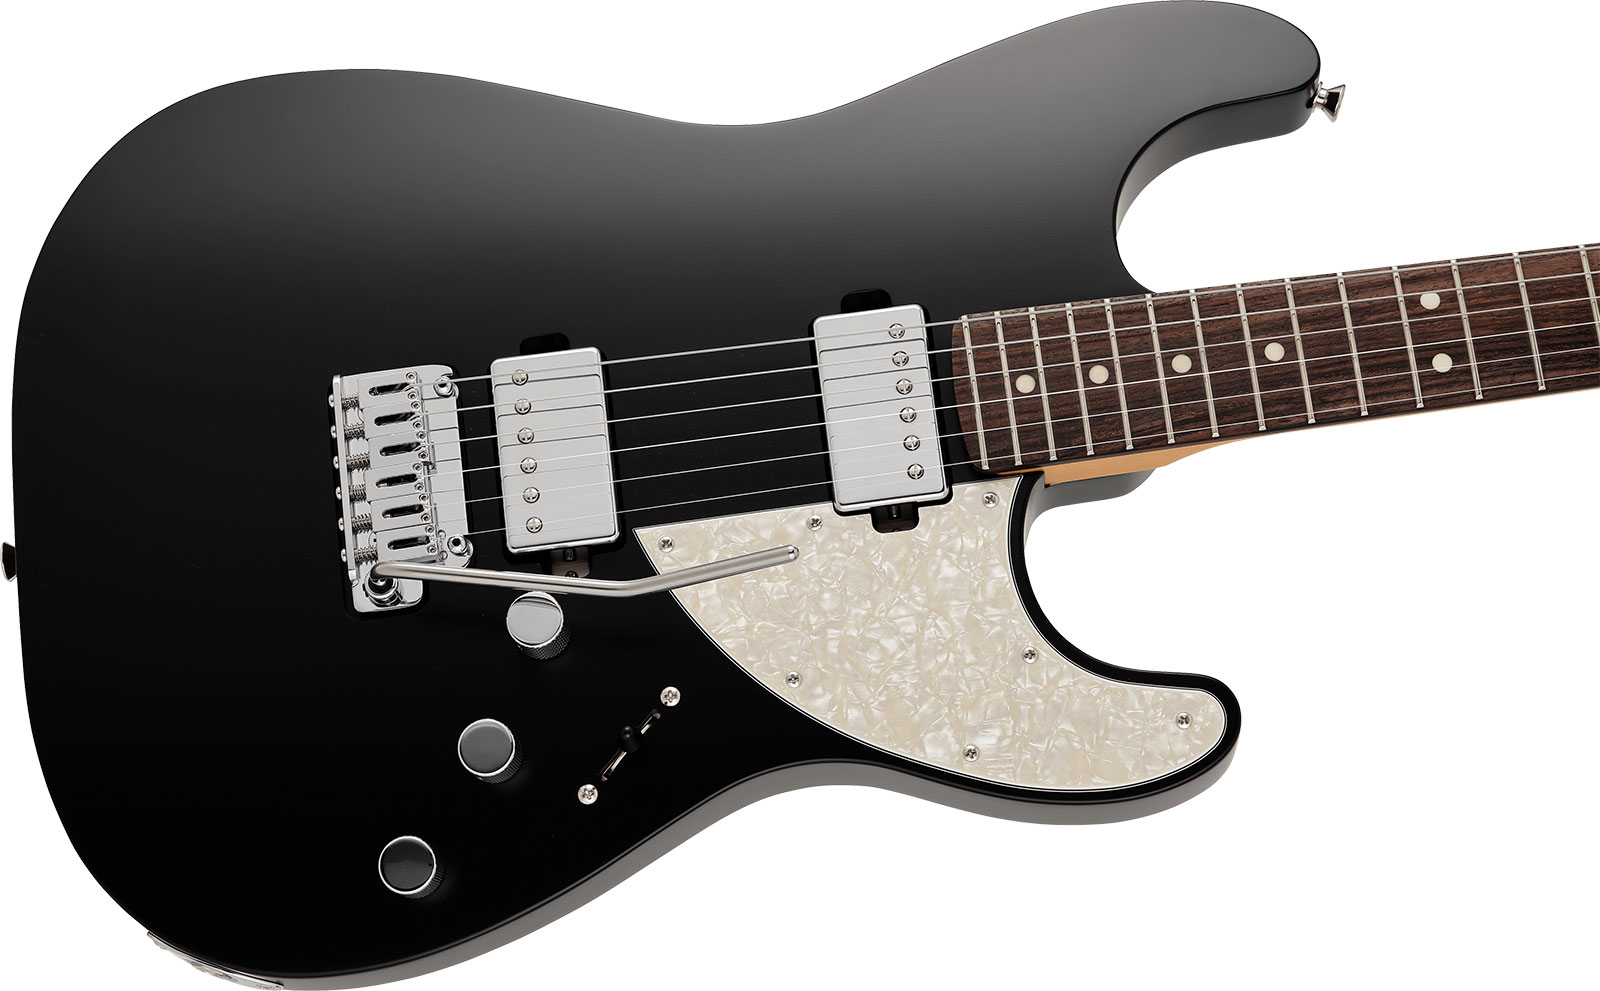 Fender Strat Elemental Mij Jap 2h Trem Rw - Stone Black - Guitarra eléctrica con forma de str. - Variation 2